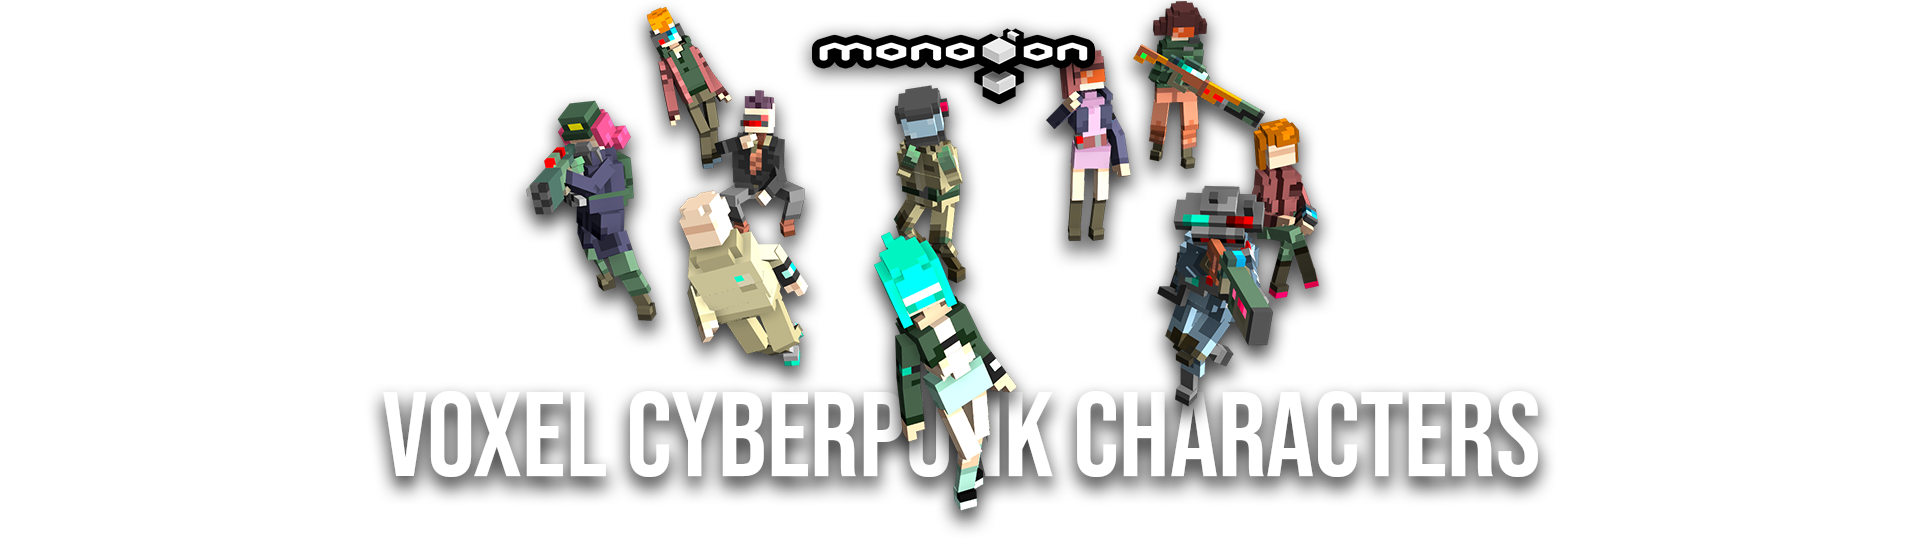 Voxel Cyberpunk Characters - monogon